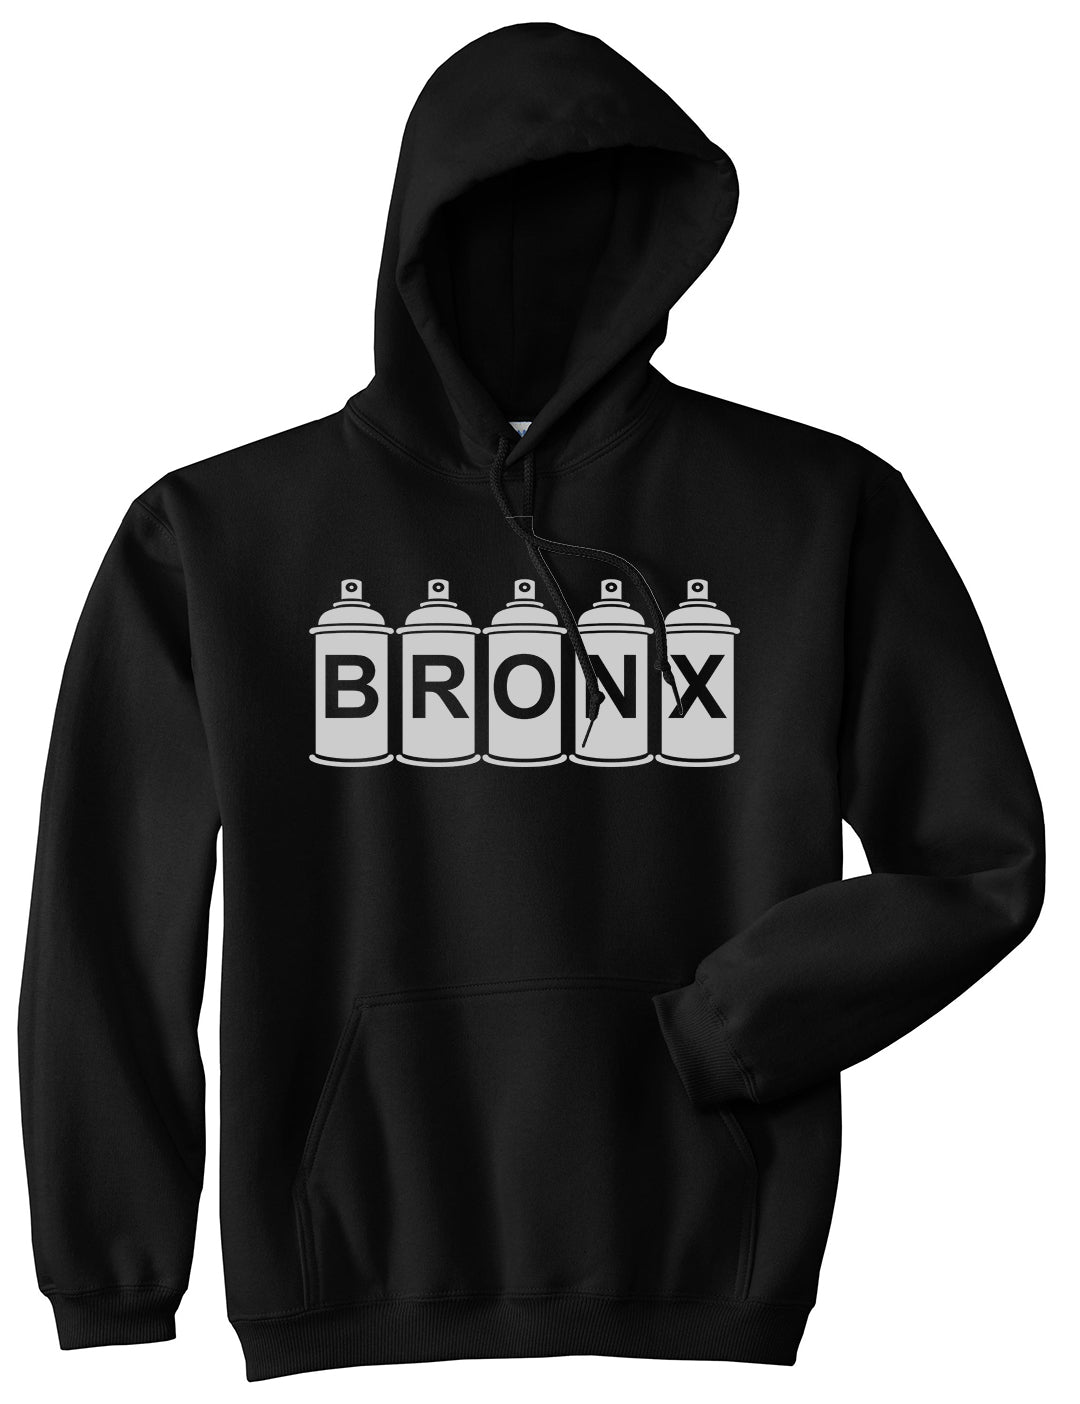 Bronx Graffiti Art Spray Can NY Mens Pullover Hoodie Black